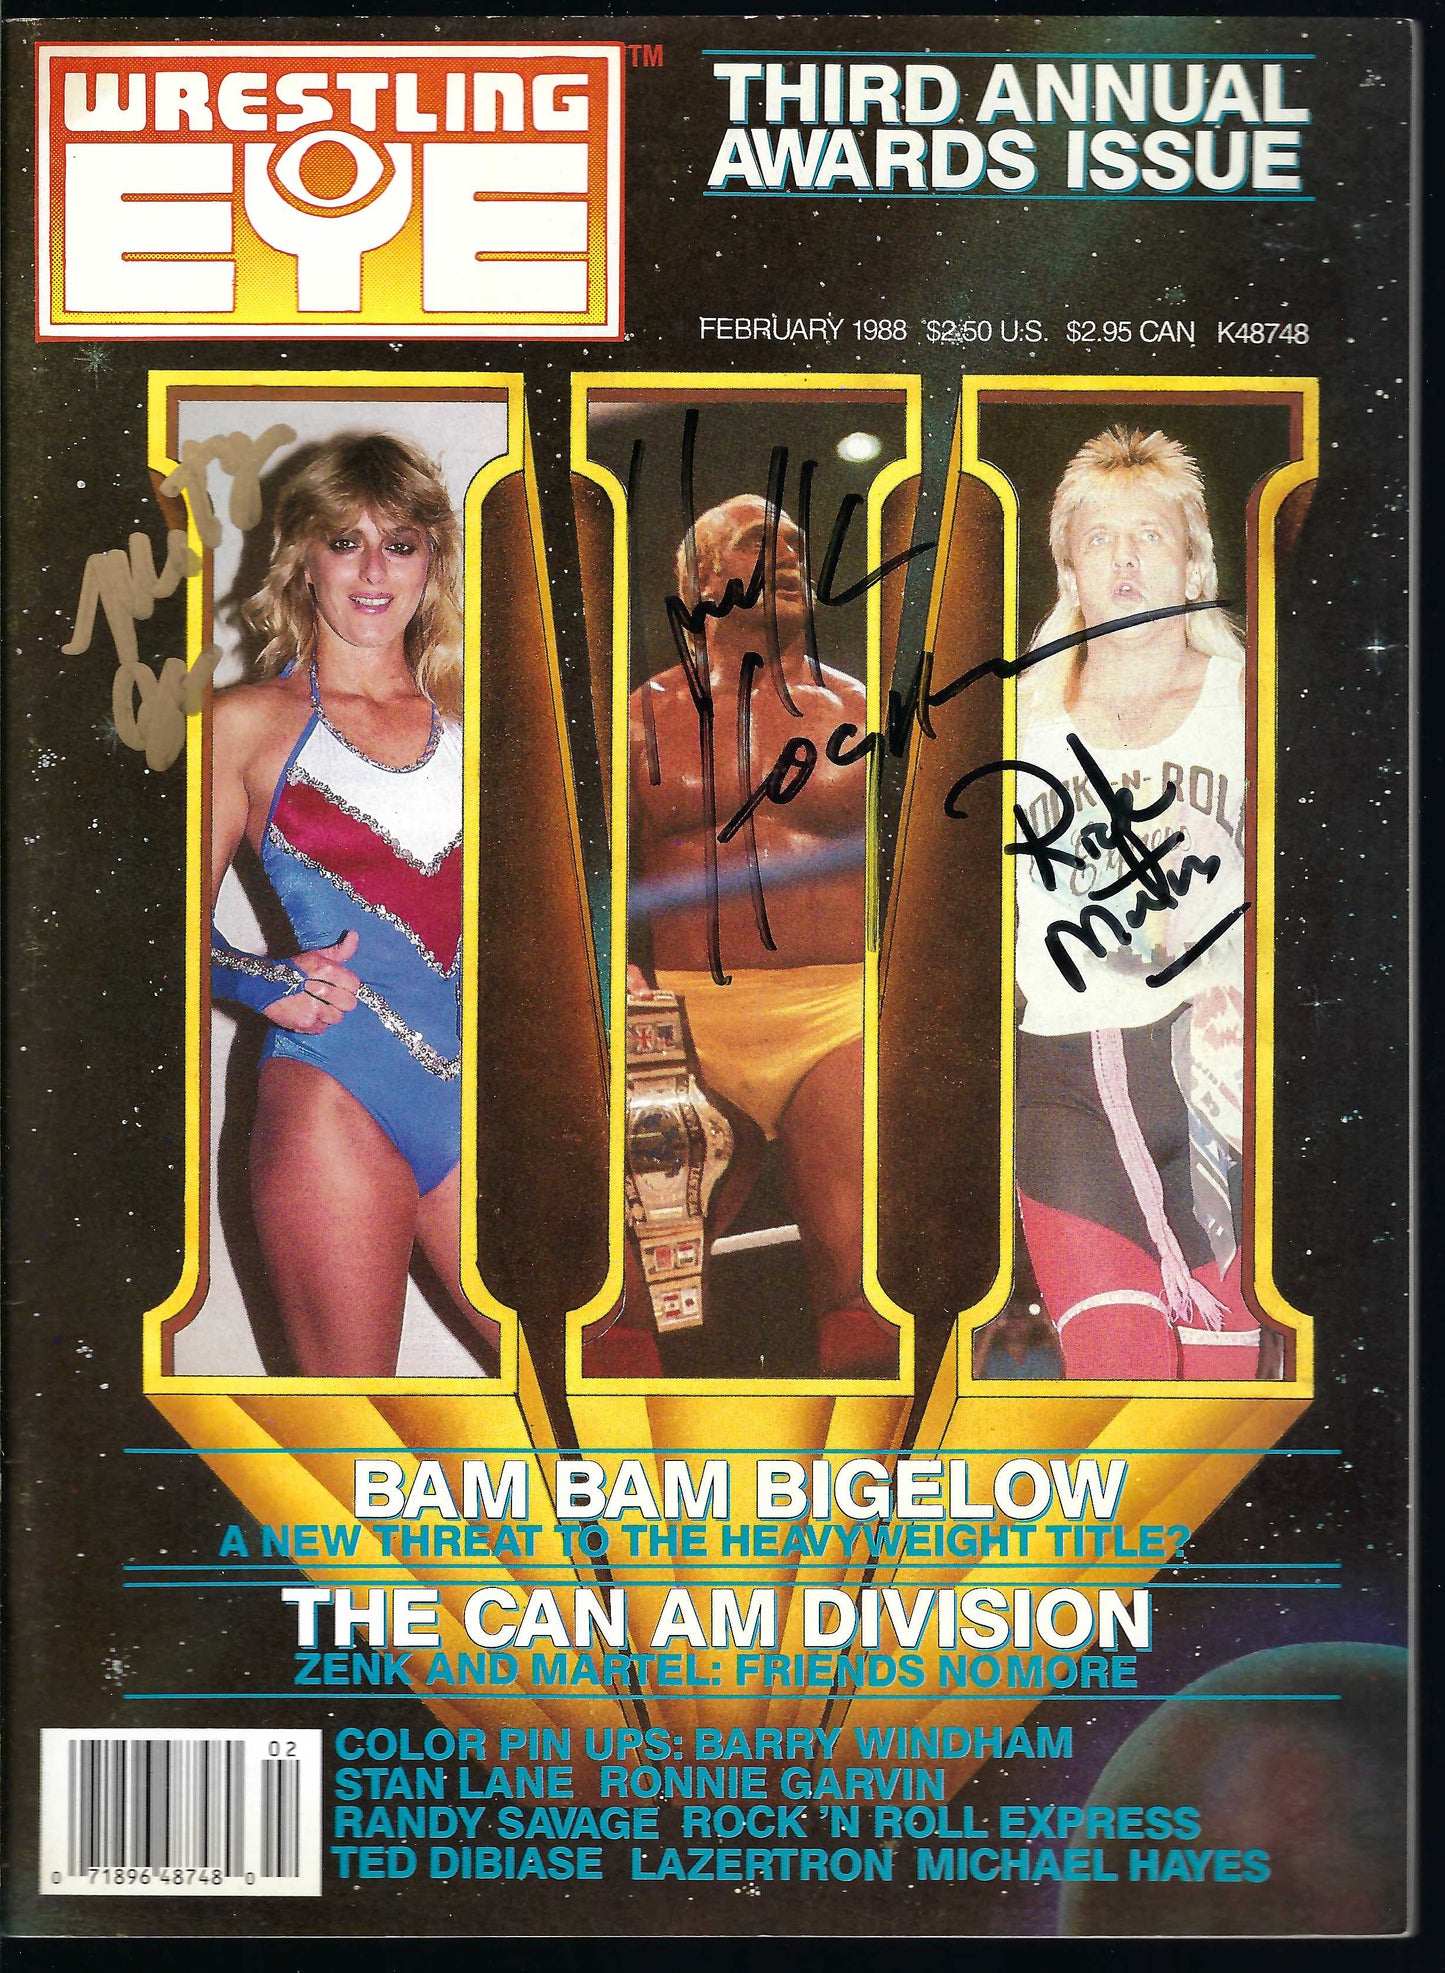 MBSM28   Misty Blue Simmes   Hulk Hogan  Ricky Morton Rugged Ronnie Garvin Poster  VERY RARE Autographed Vintage Wrestling  Magazine  w/COA